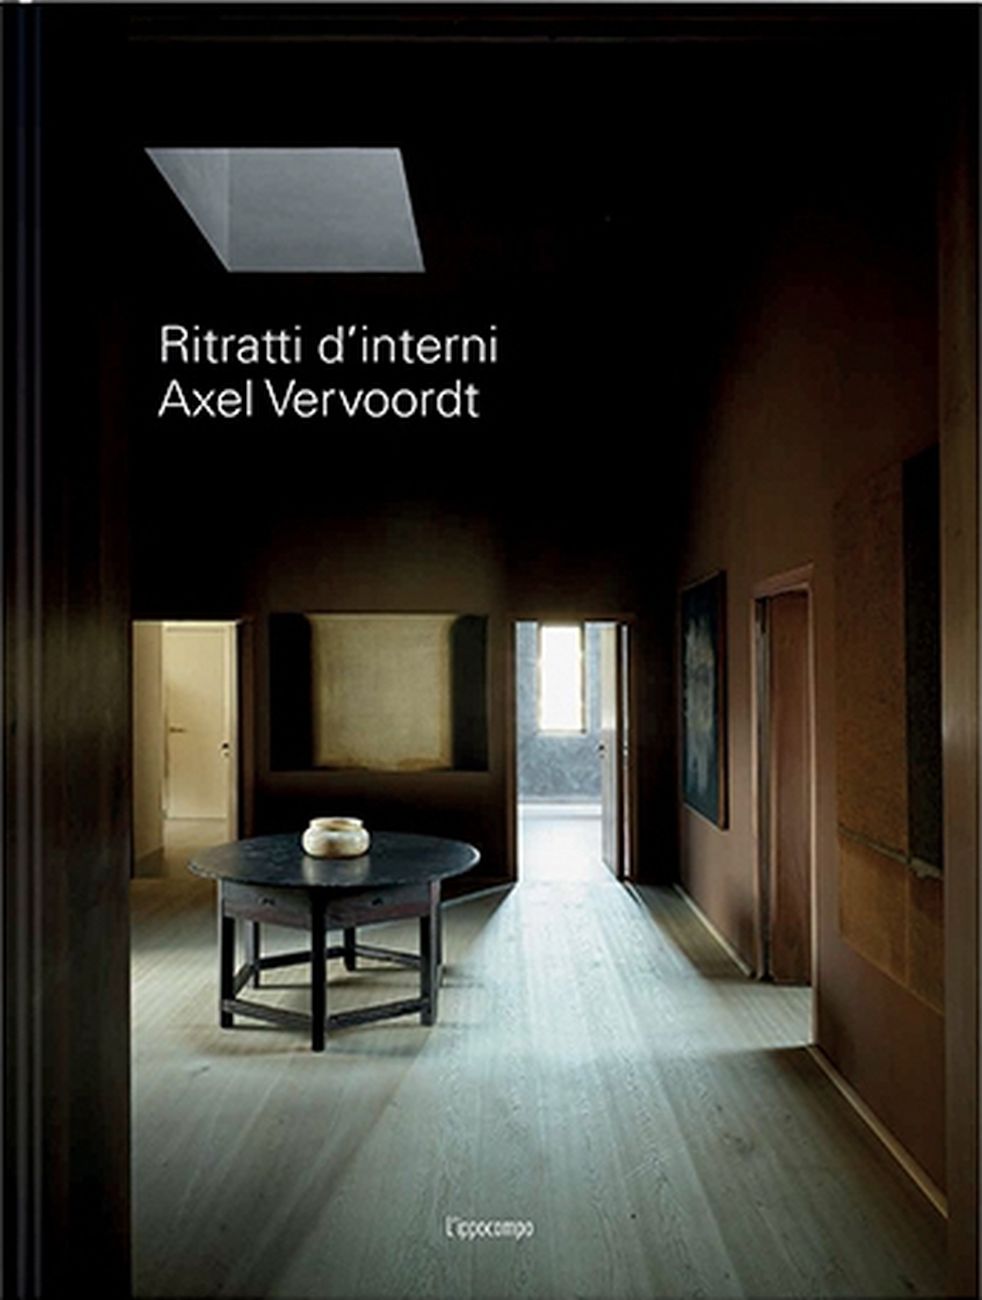 Axel Vervoordt – Ritratti d'interni (L'ippocampo, Milano 2019)